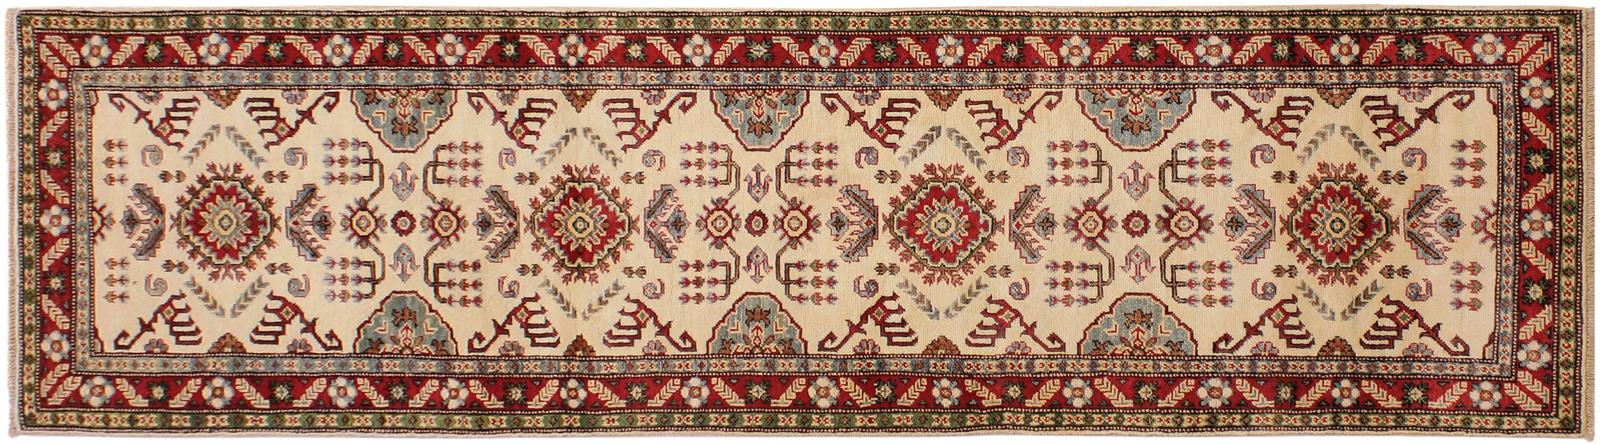 handmade Geometric Kazak Ivory Red Hand Knotted RUNNER 100% WOOL area rug 3x10